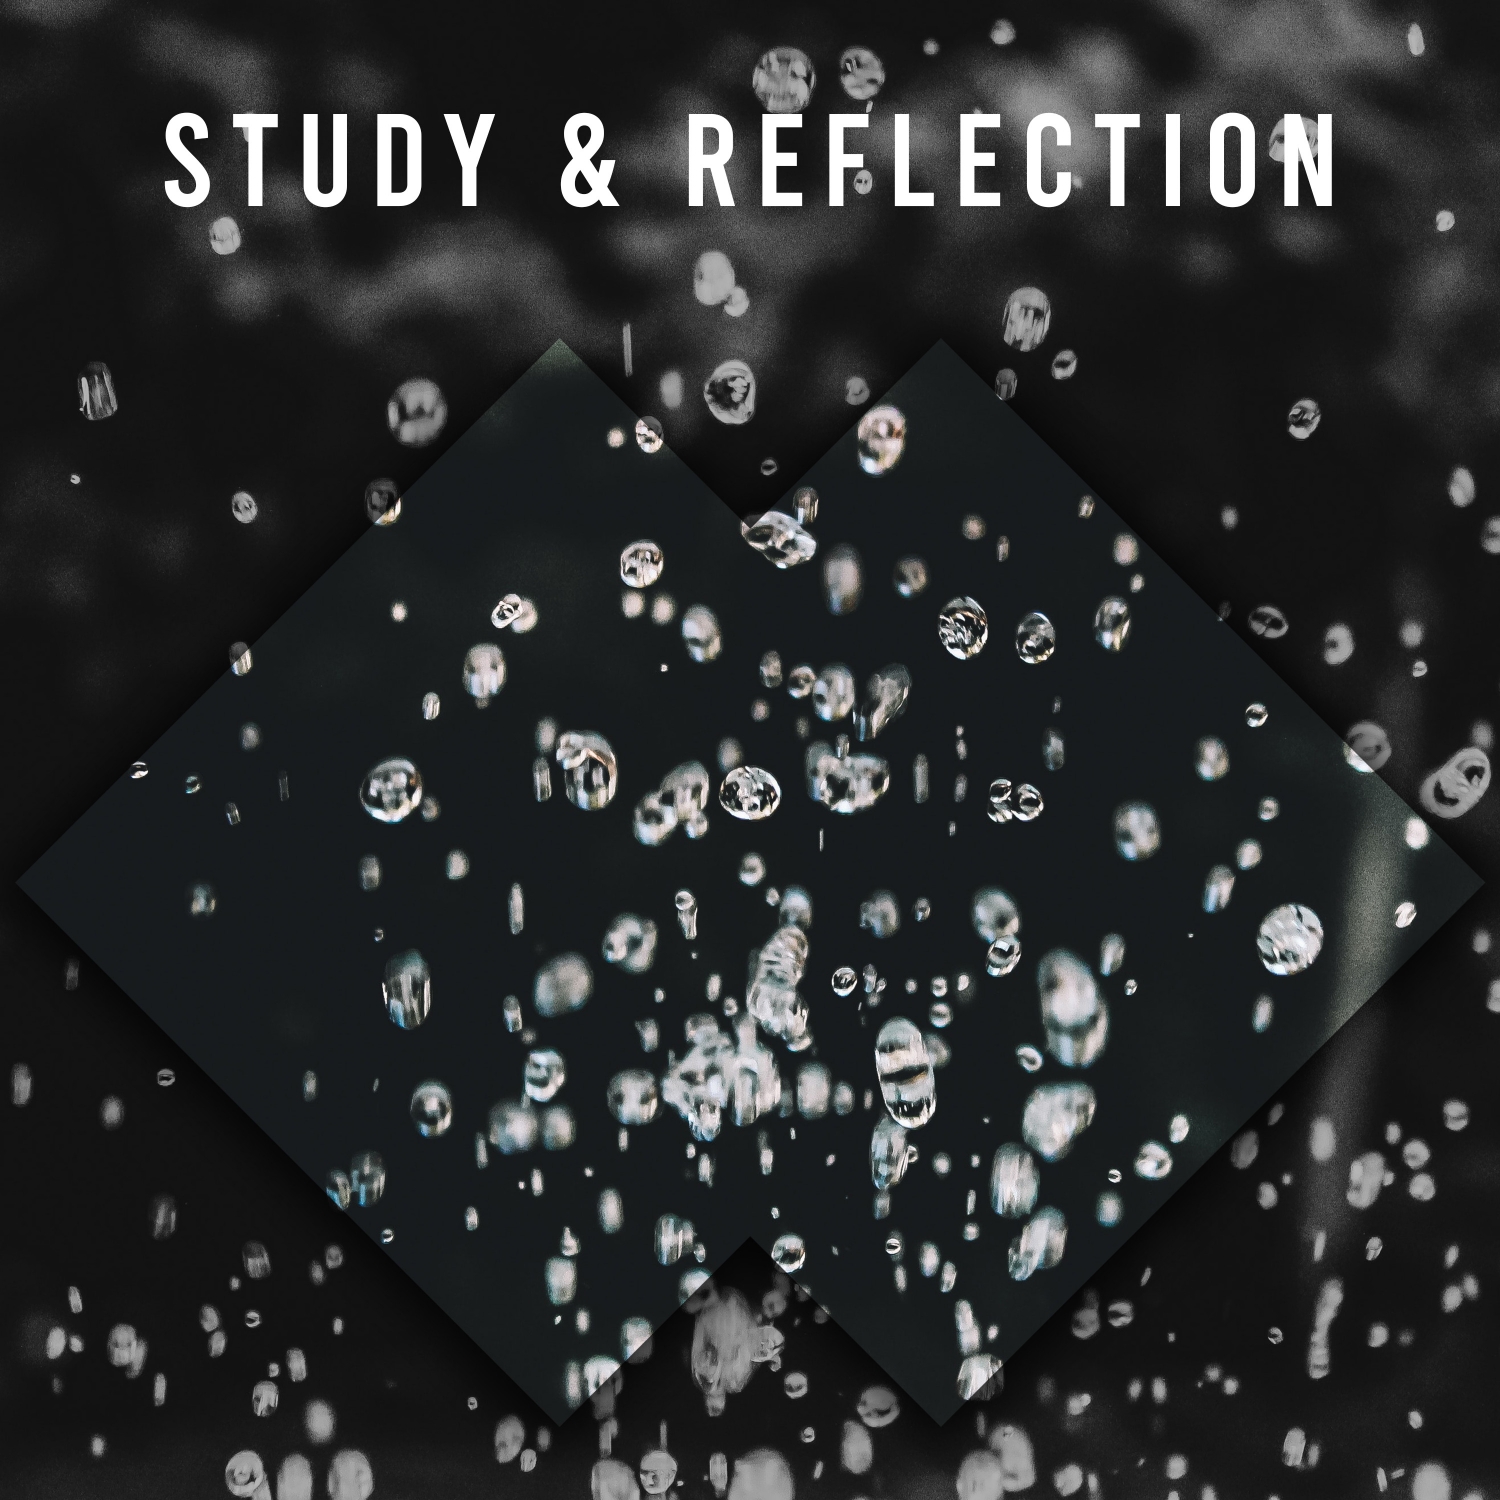 18 Mindfulness Rain Tracks for Study & Reflection